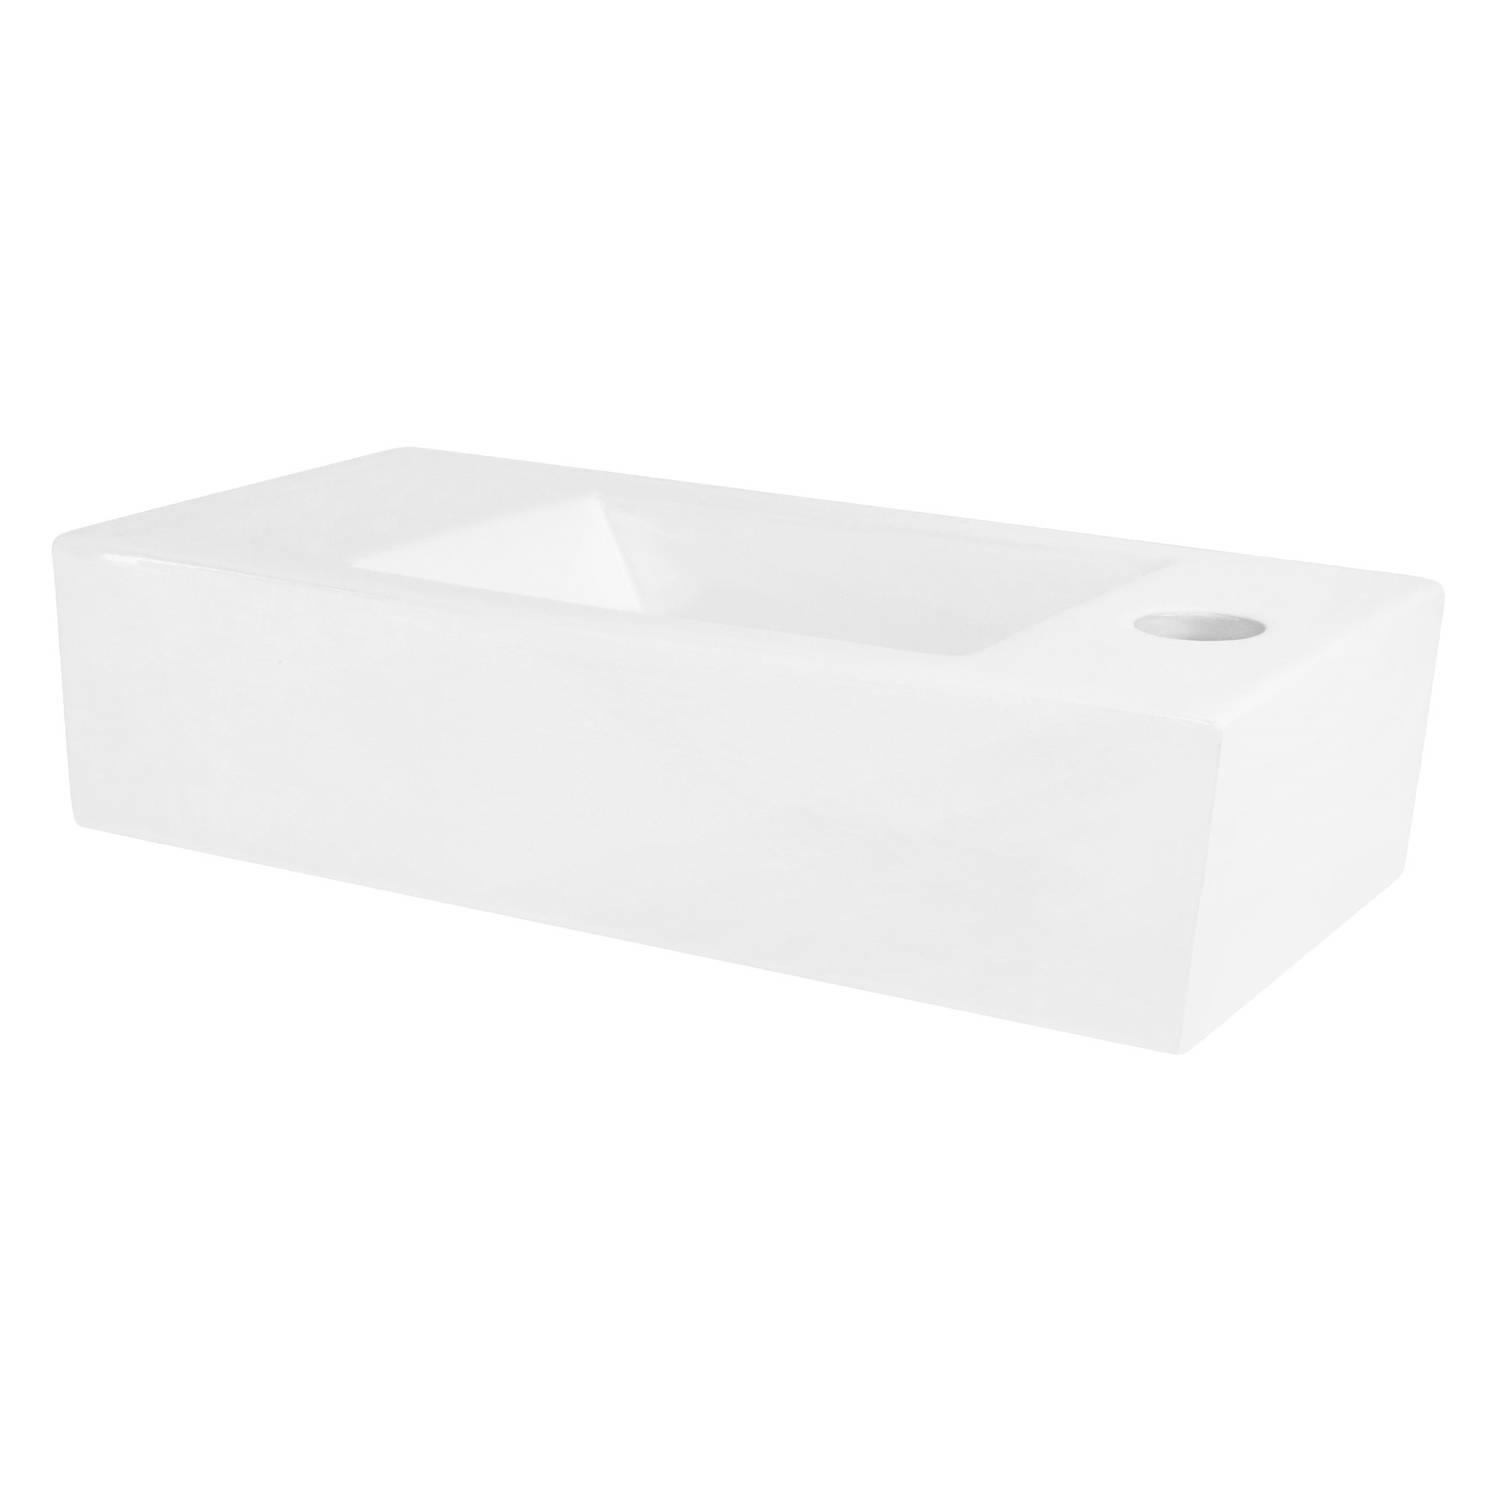 ML-Design keramische wastafel in wit 40x18,5x10 cm, hoekig, klein, kraangat rechts, wand- of opzetwastafel, moderne wastafel waskom handwasbak, voor badkamers